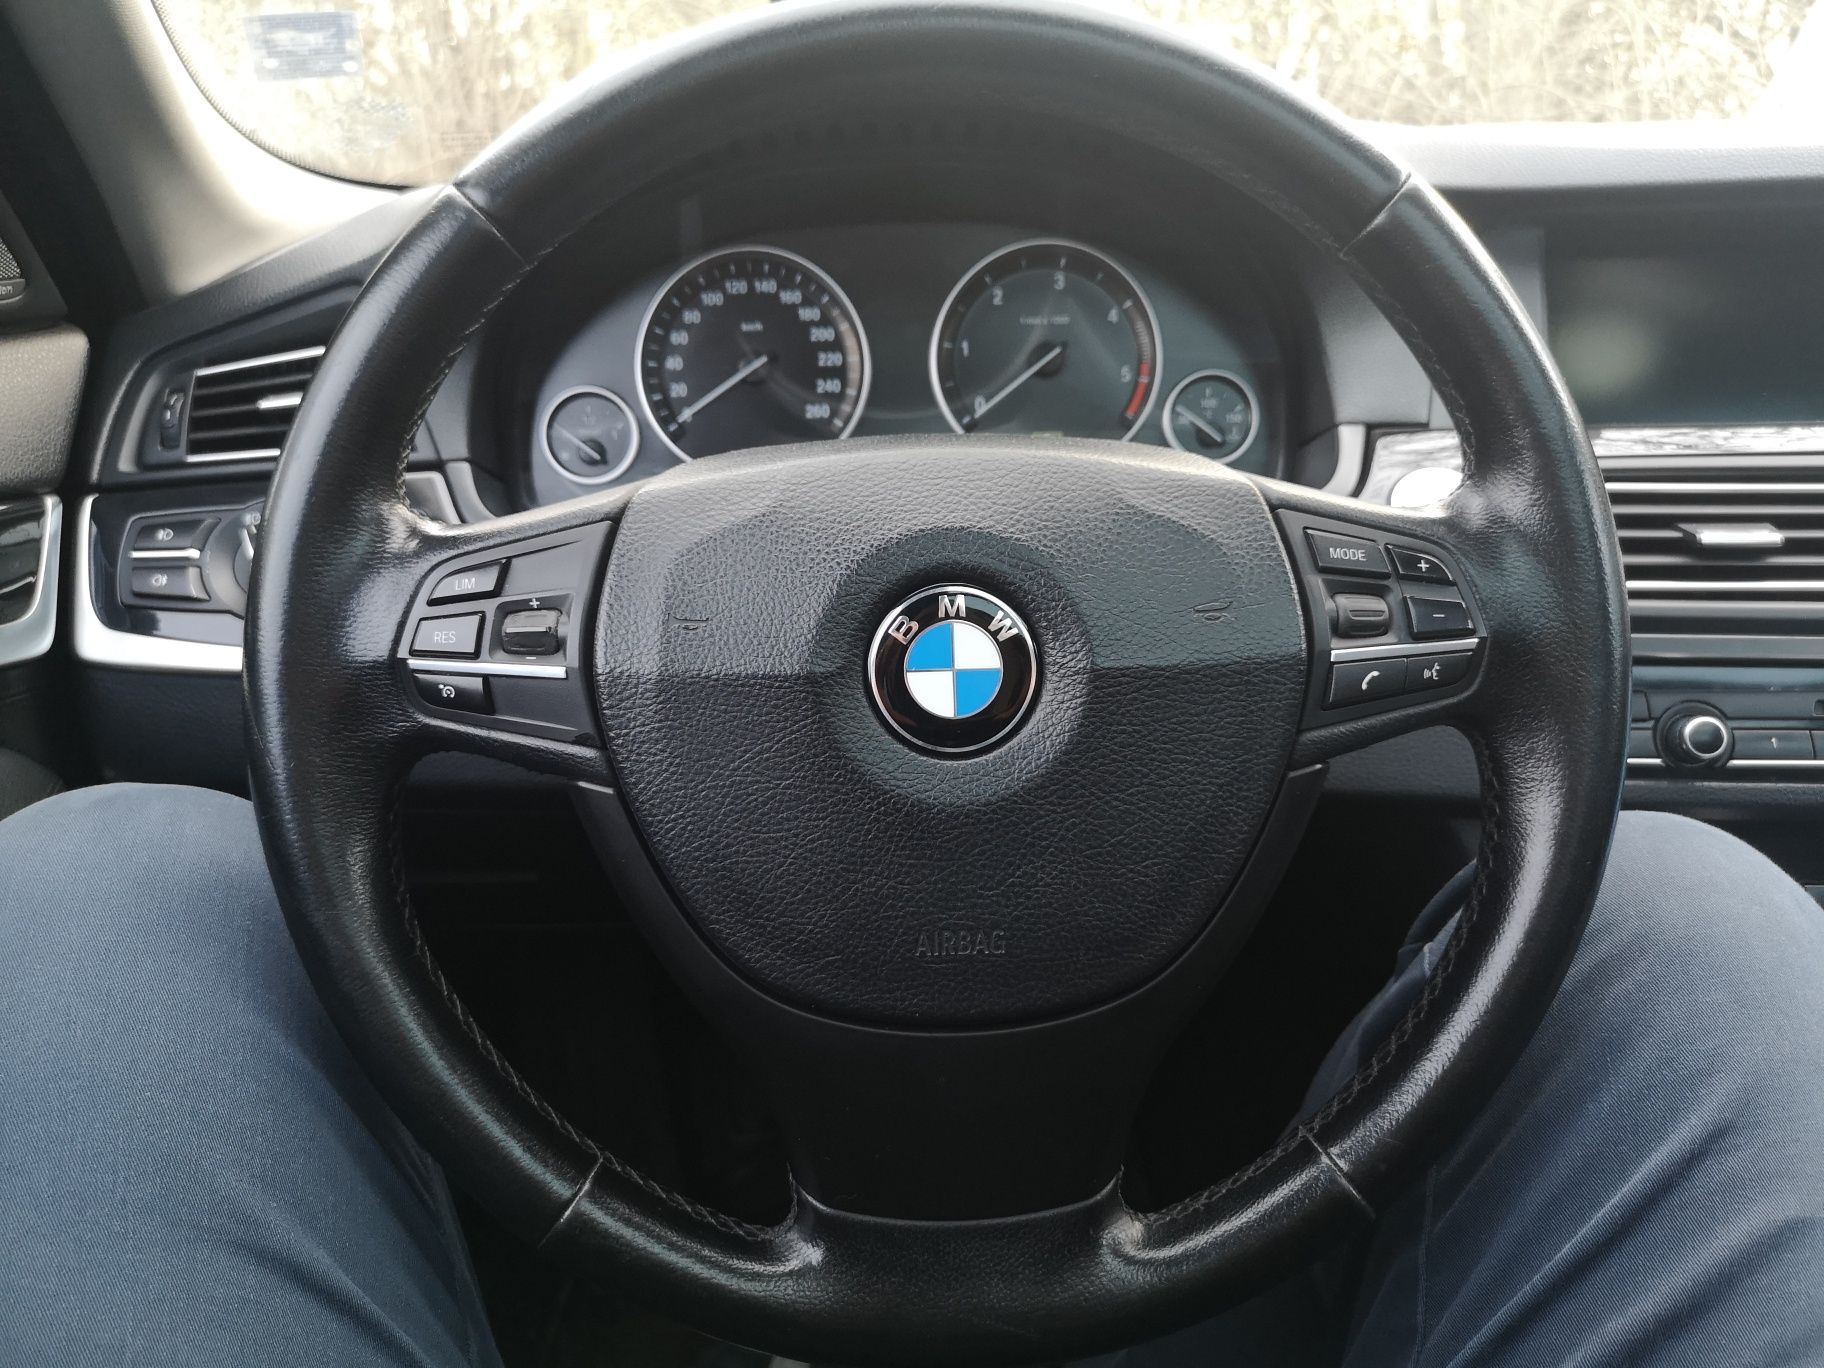 Волан BMW F10 F11 с airbag